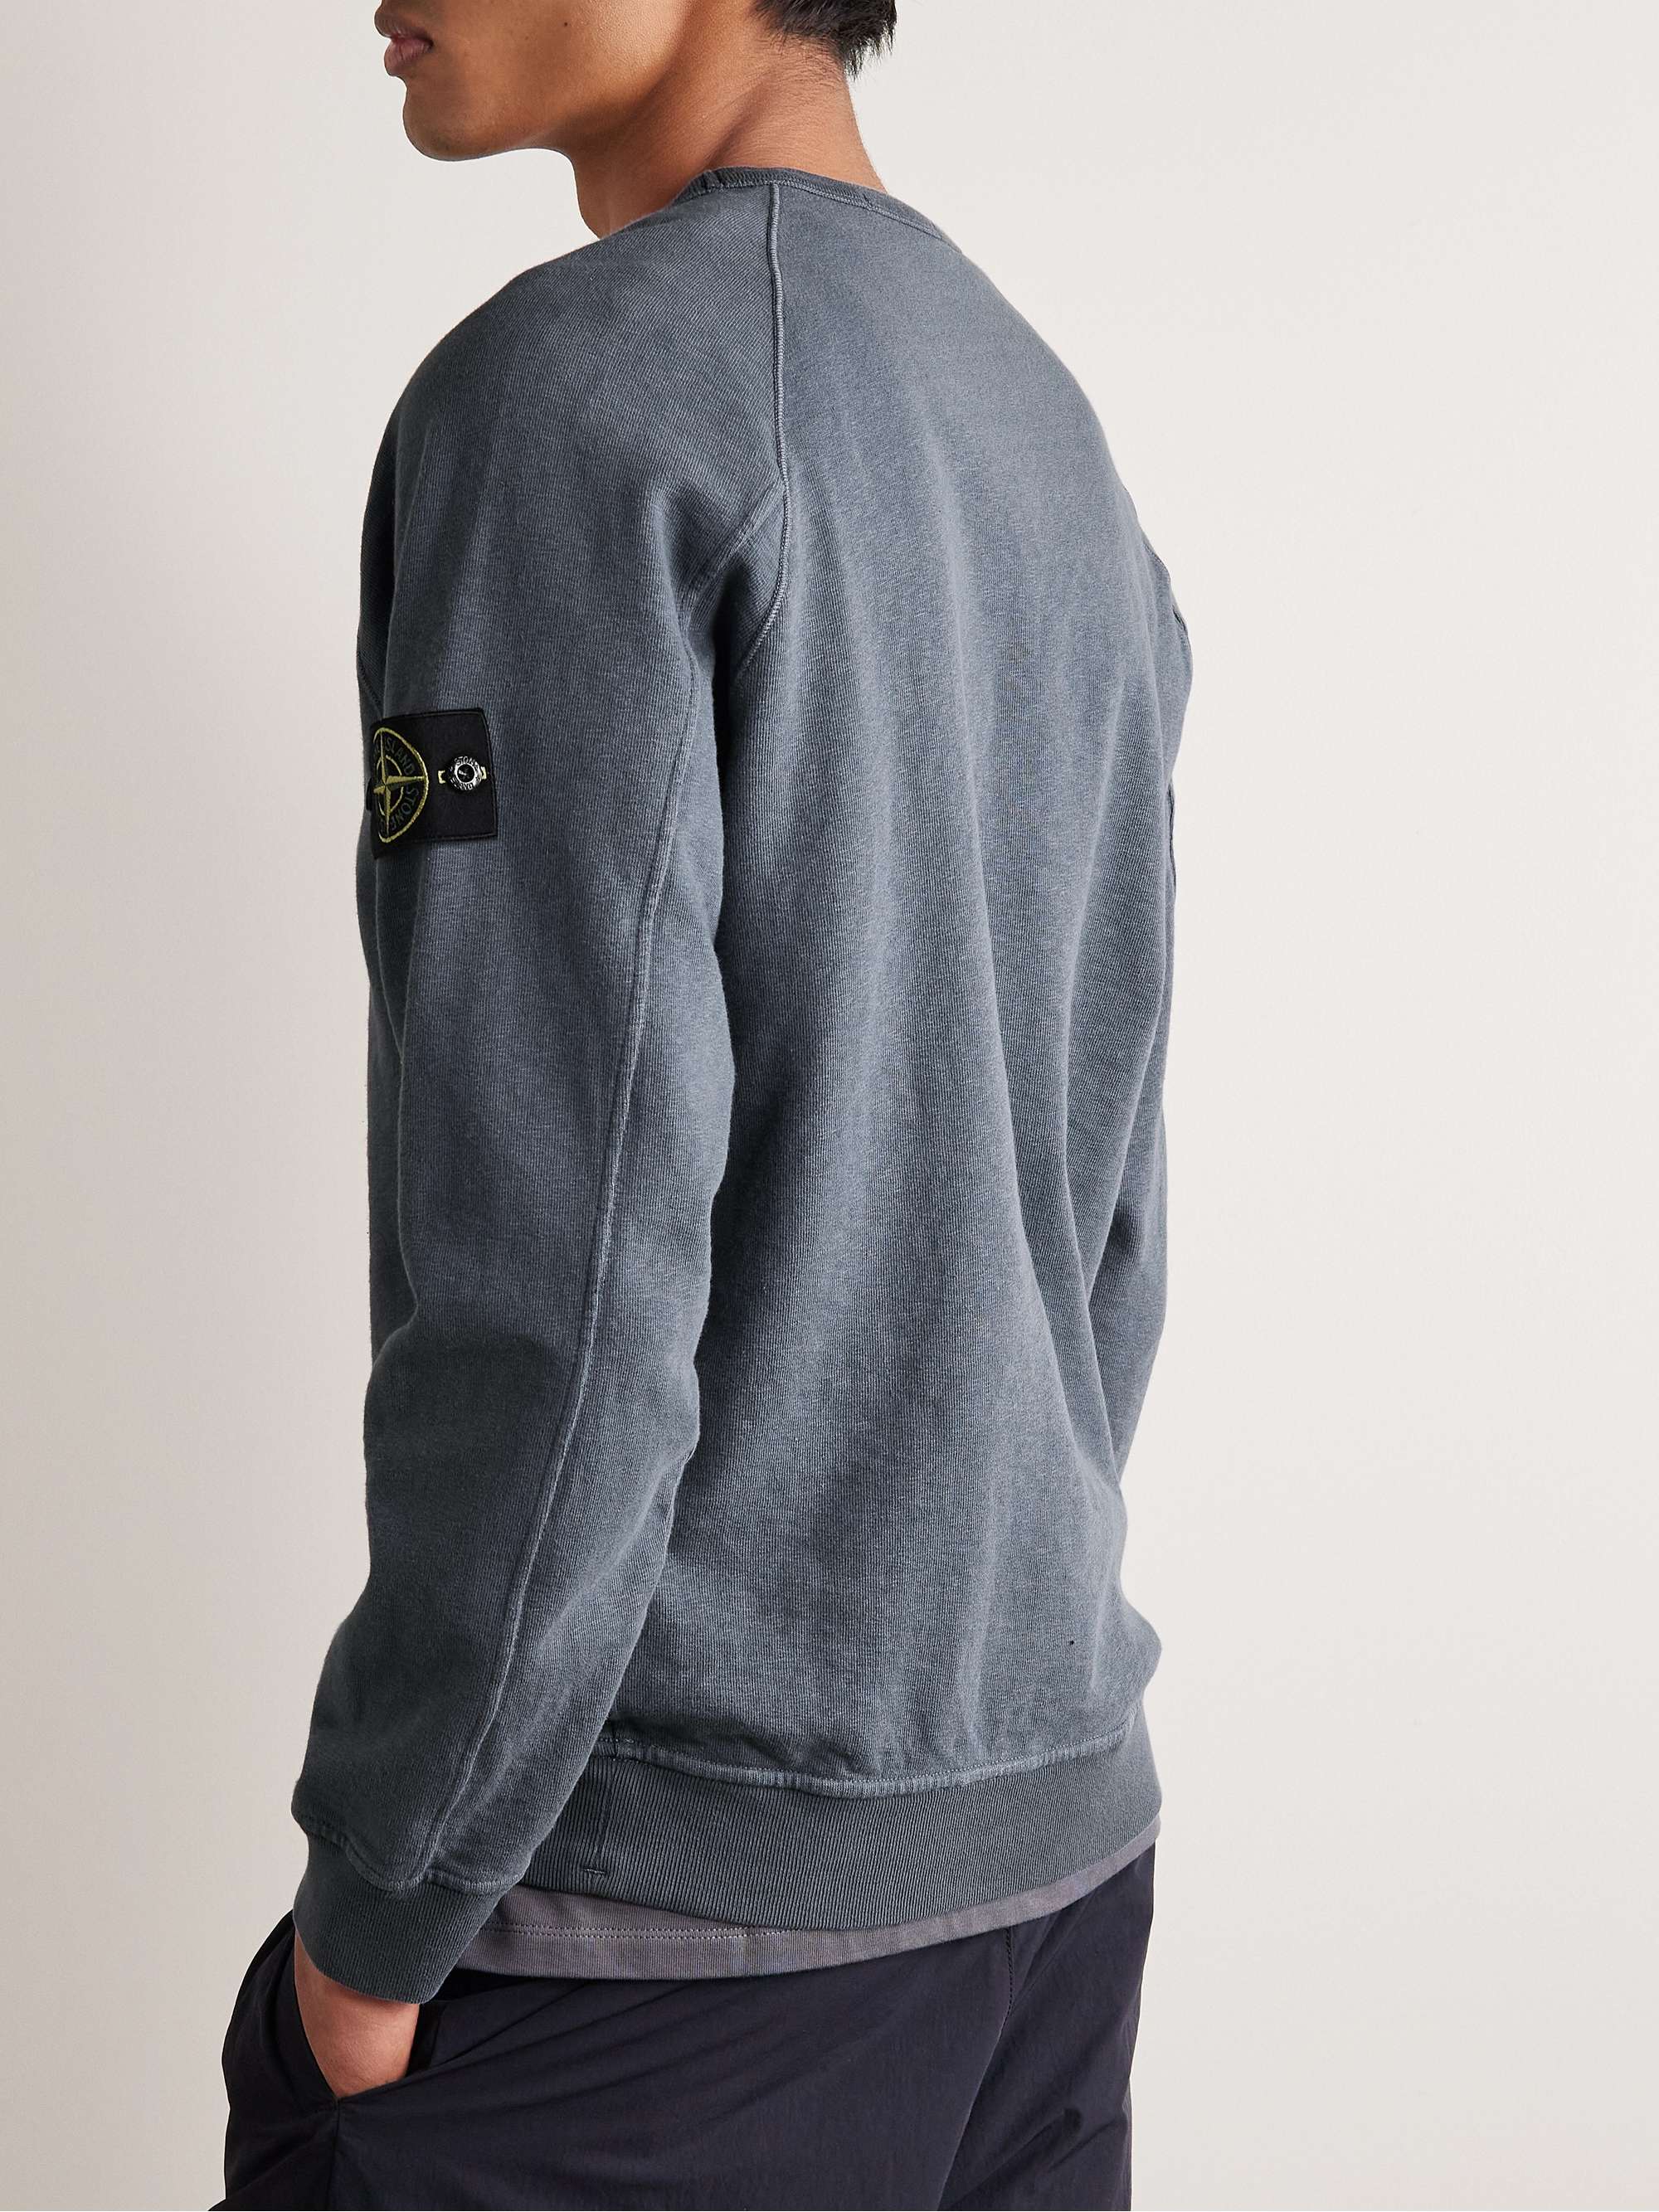 STONE ISLAND Logo-Appliquéd Garment-Dyed Cotton-Jersey Sweatshirt